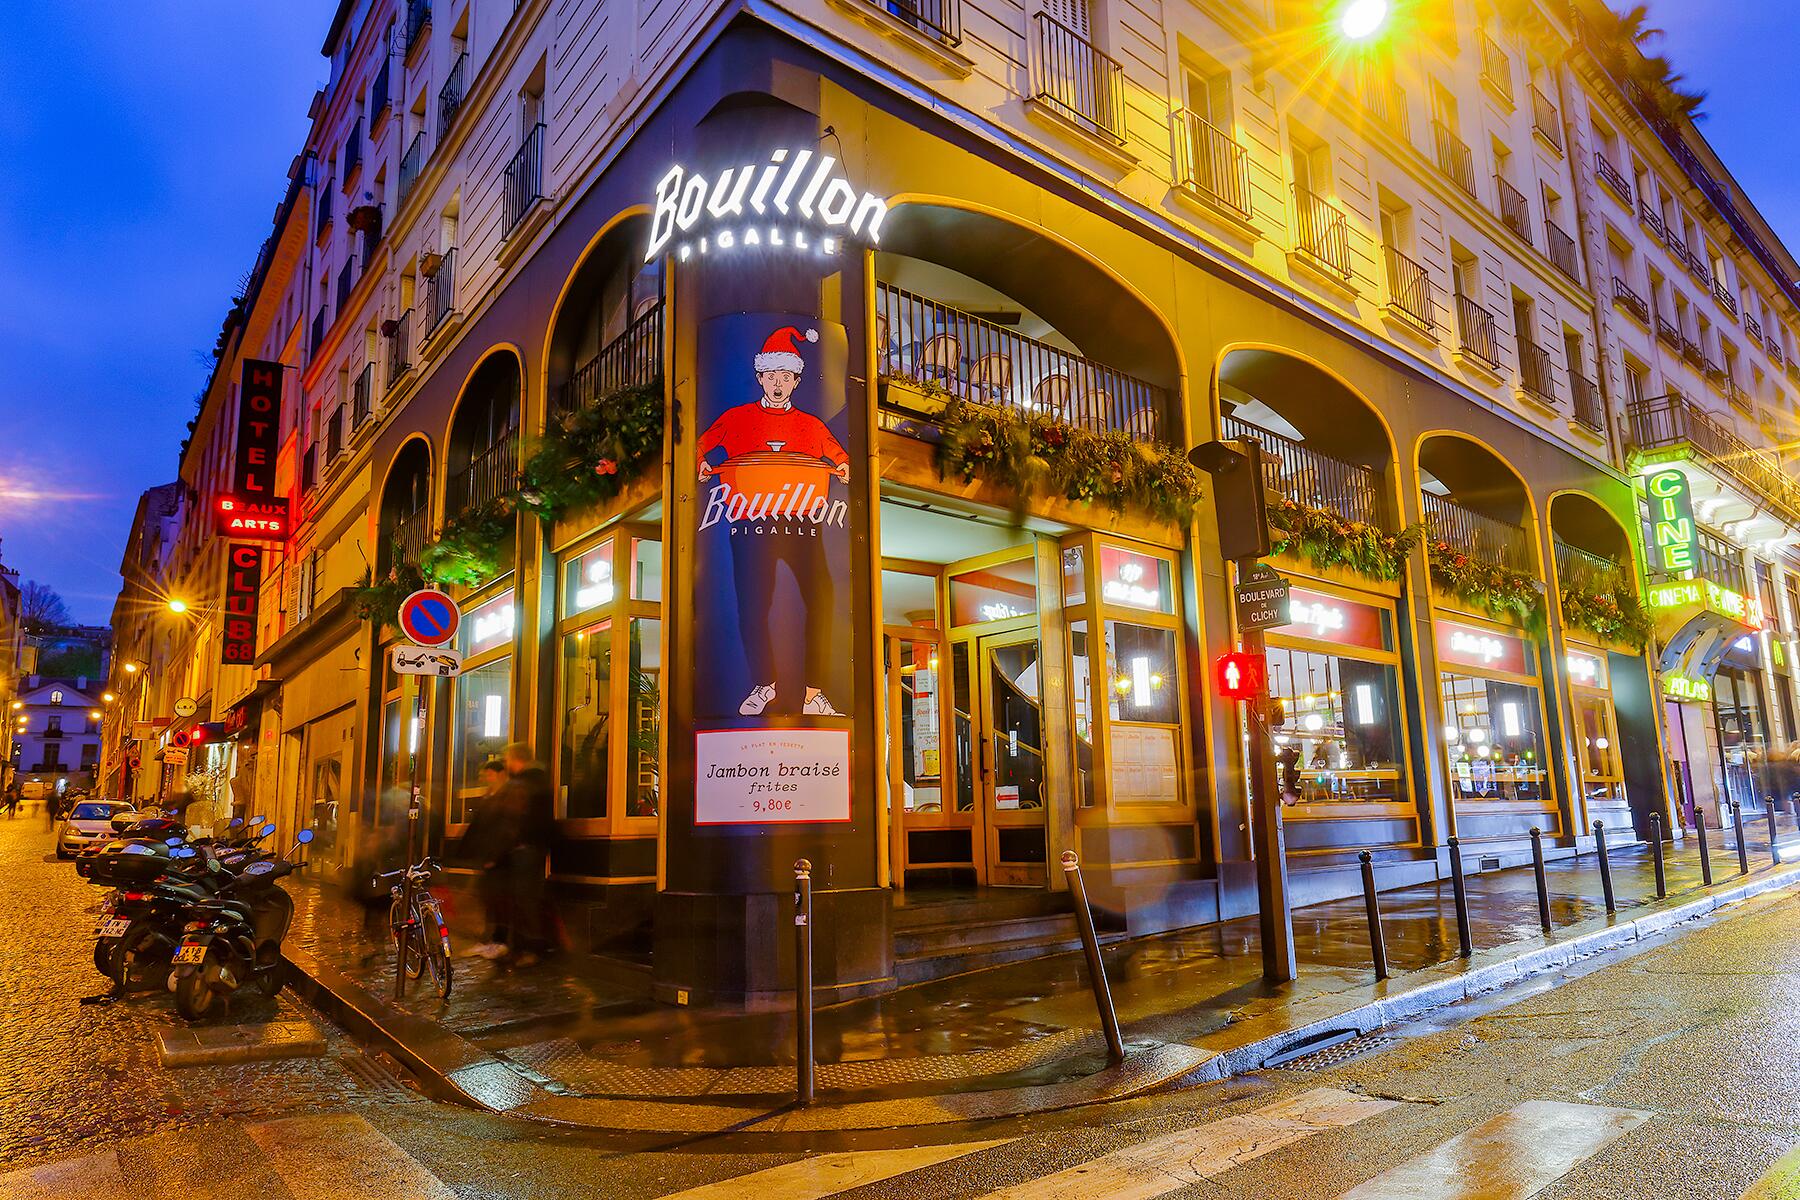 <a href='https://www.fodors.com/world/europe/france/paris/experiences/news/photos/14-classic-bistros-in-paris-worth-visiting#'>From &quot;17 Classic Paris Bistros You Must Visit: Bouillon Pigalle&quot;</a>